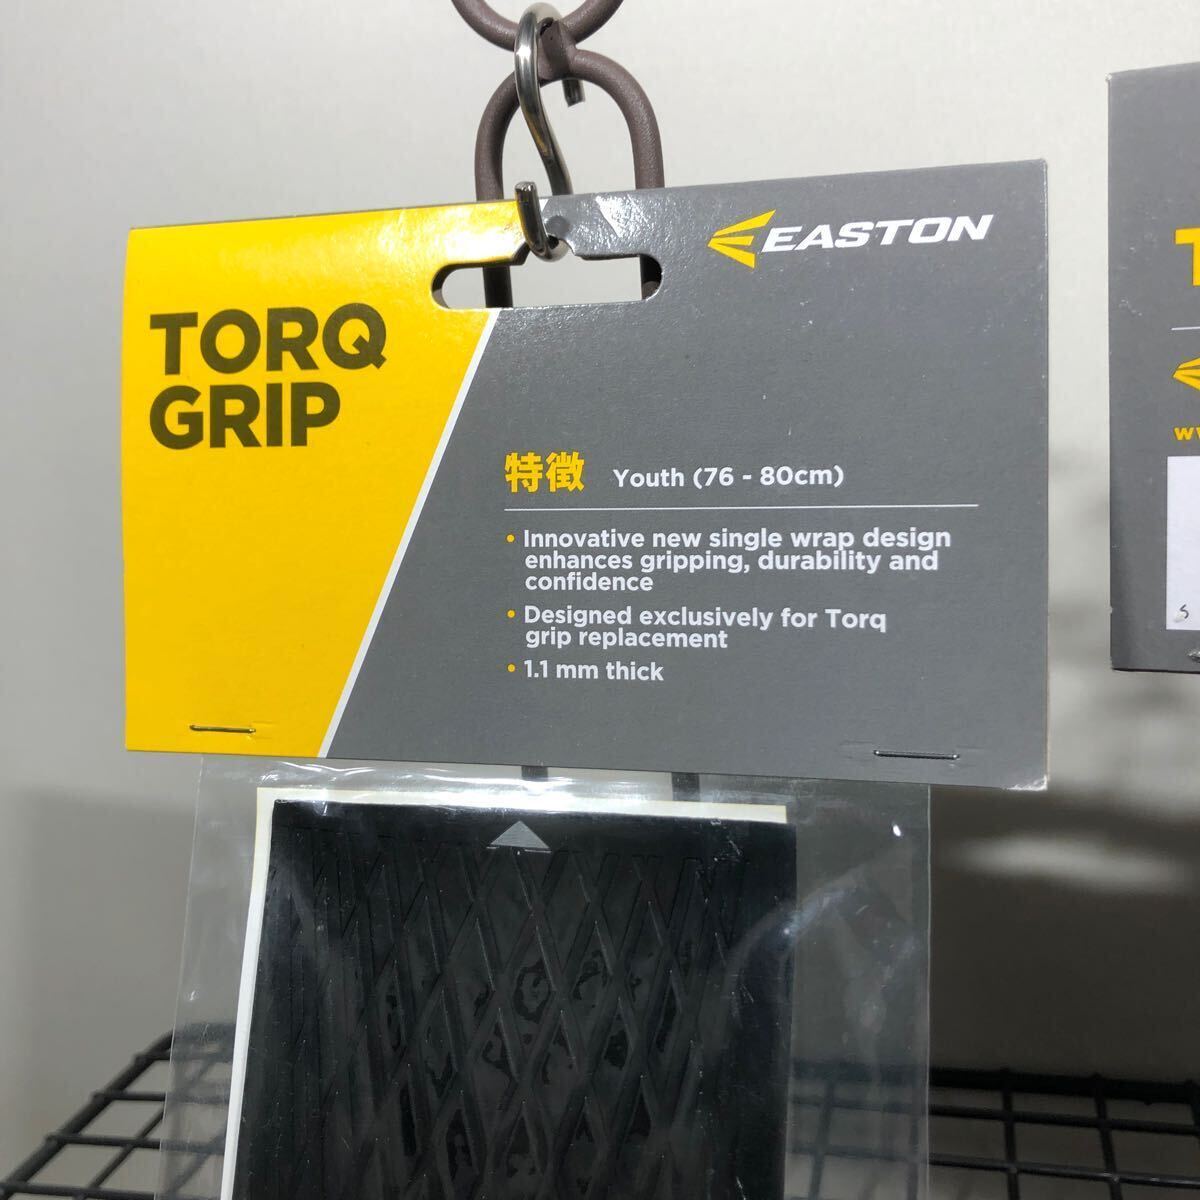 EASTONイーストン TORQ GRIP ジュニア用 バット用グリップテープ 2枚セット ブラック シルバーの画像2